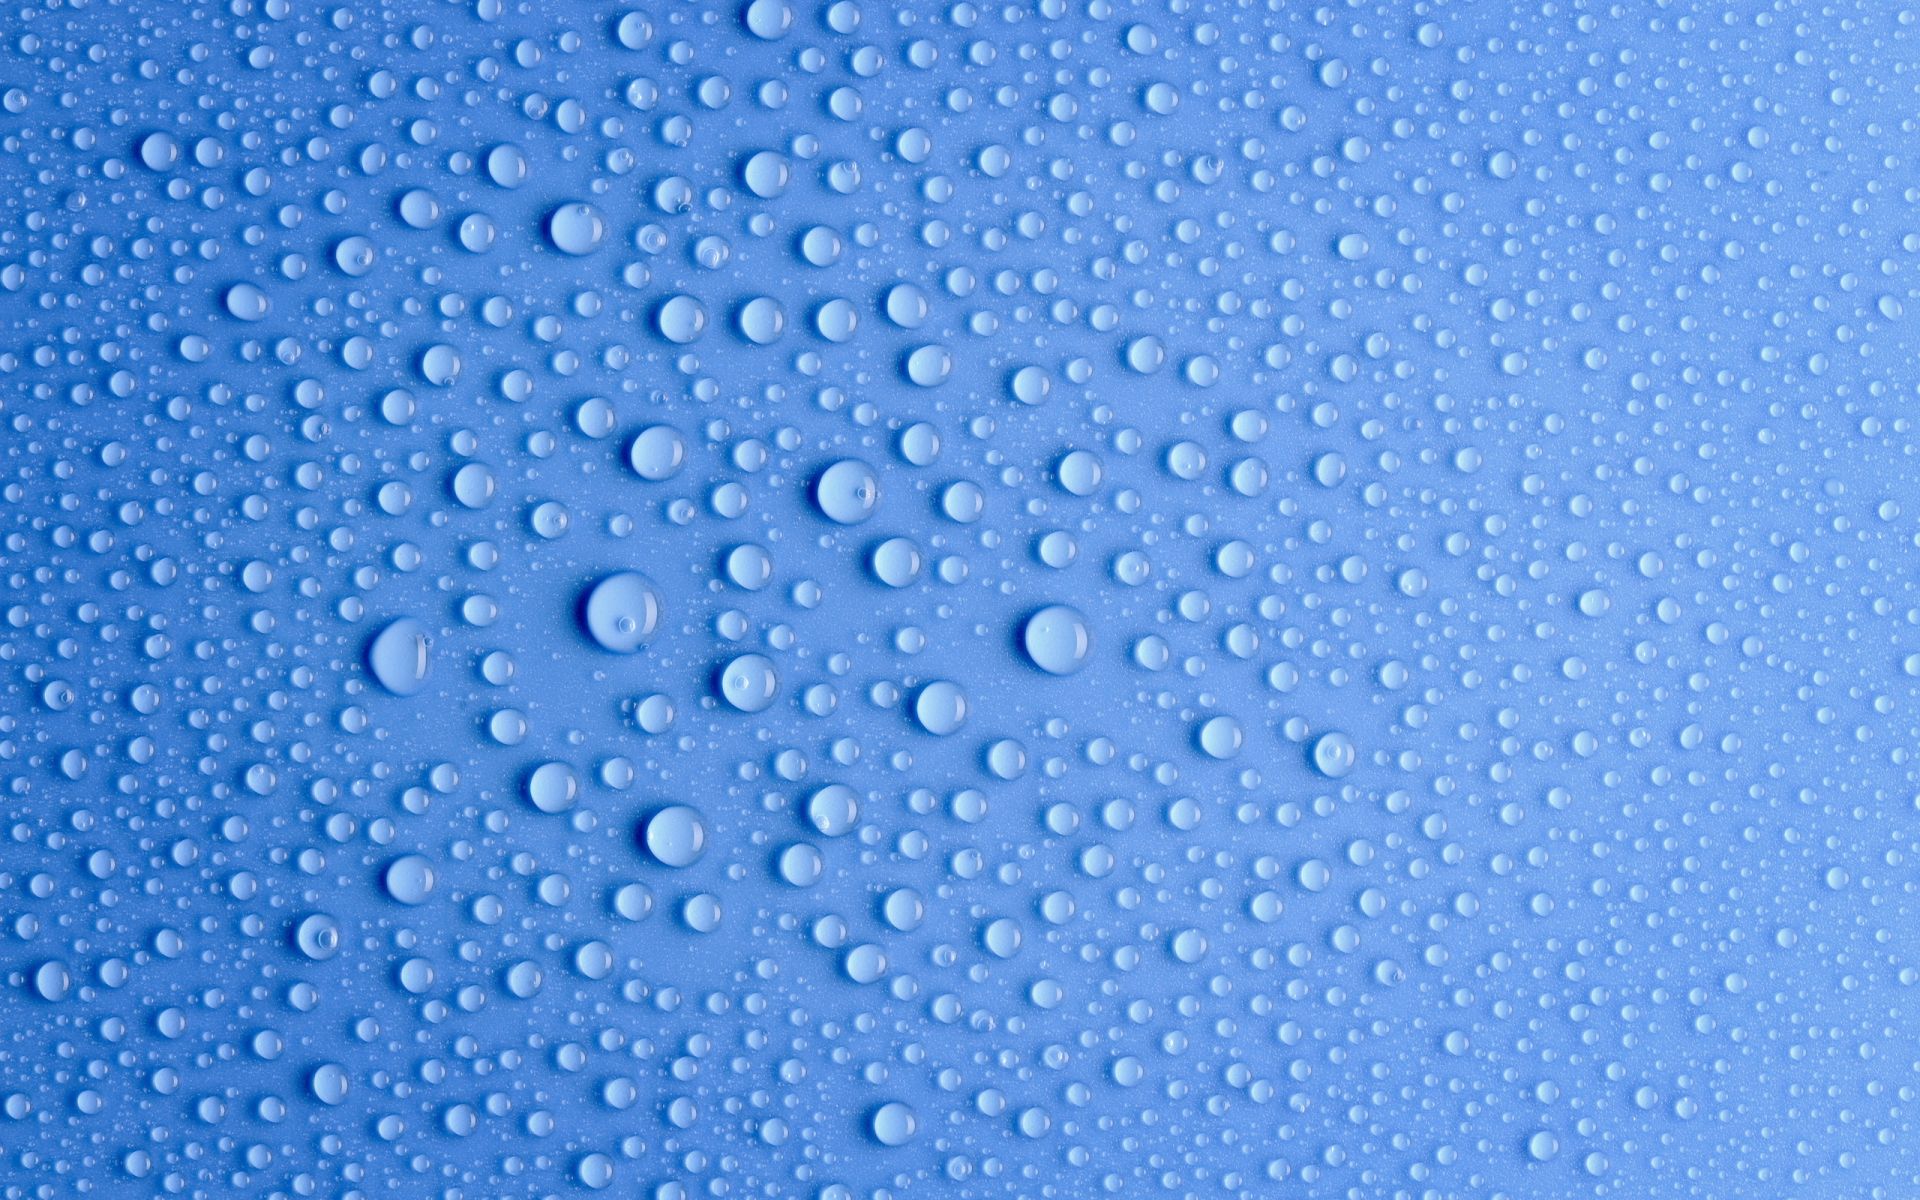 Cute Blue water drop hd wallpaper 1080p for pc